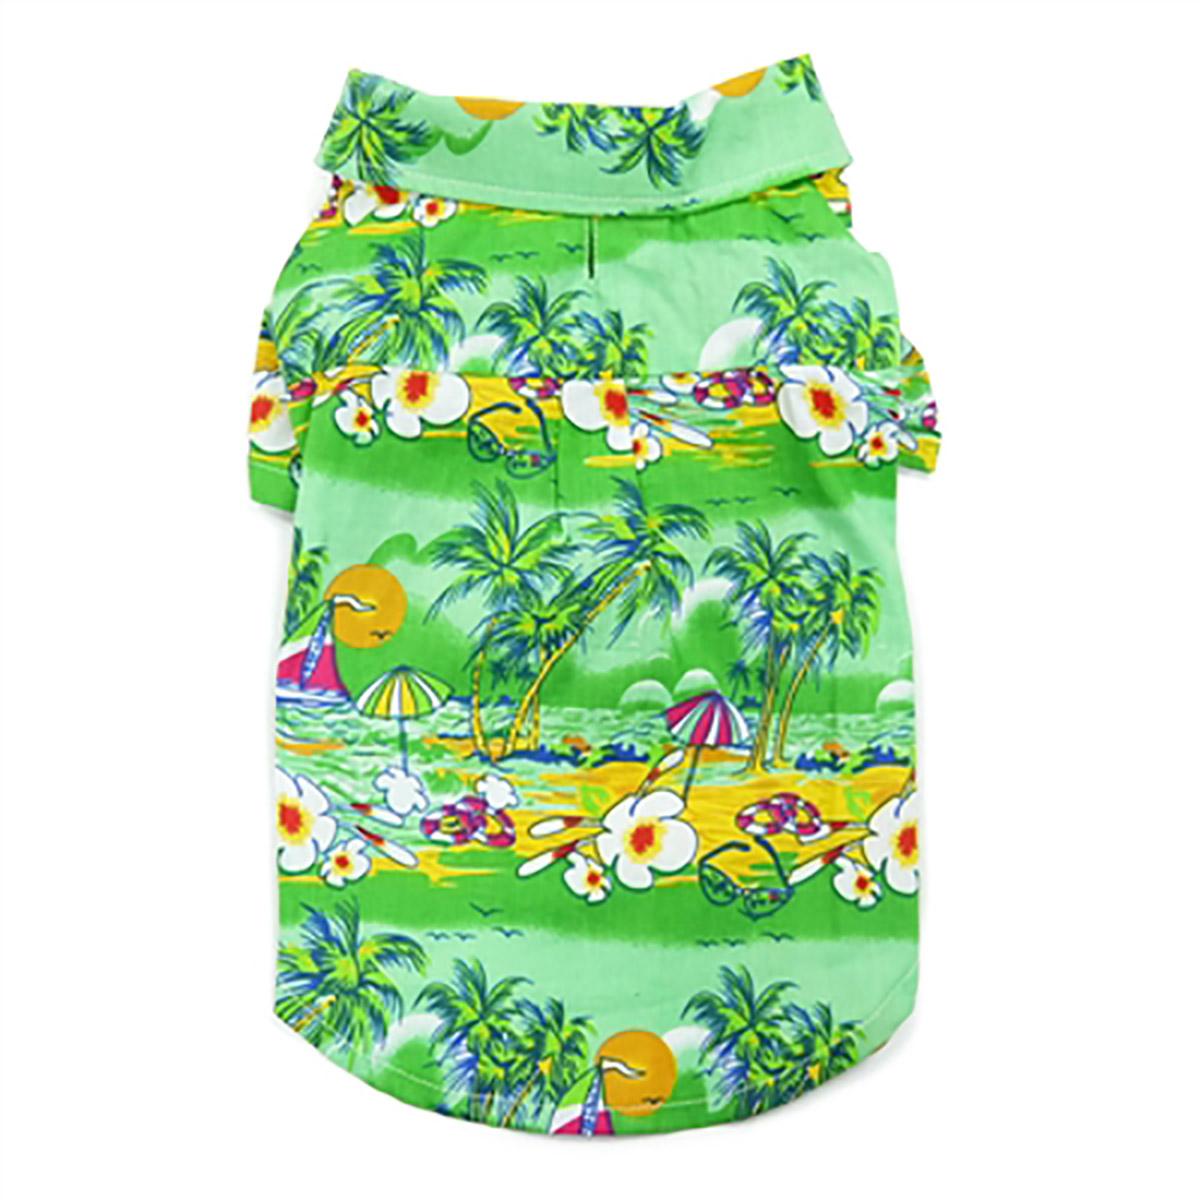 Tropical Island Dog Shirt by Dogo - Green